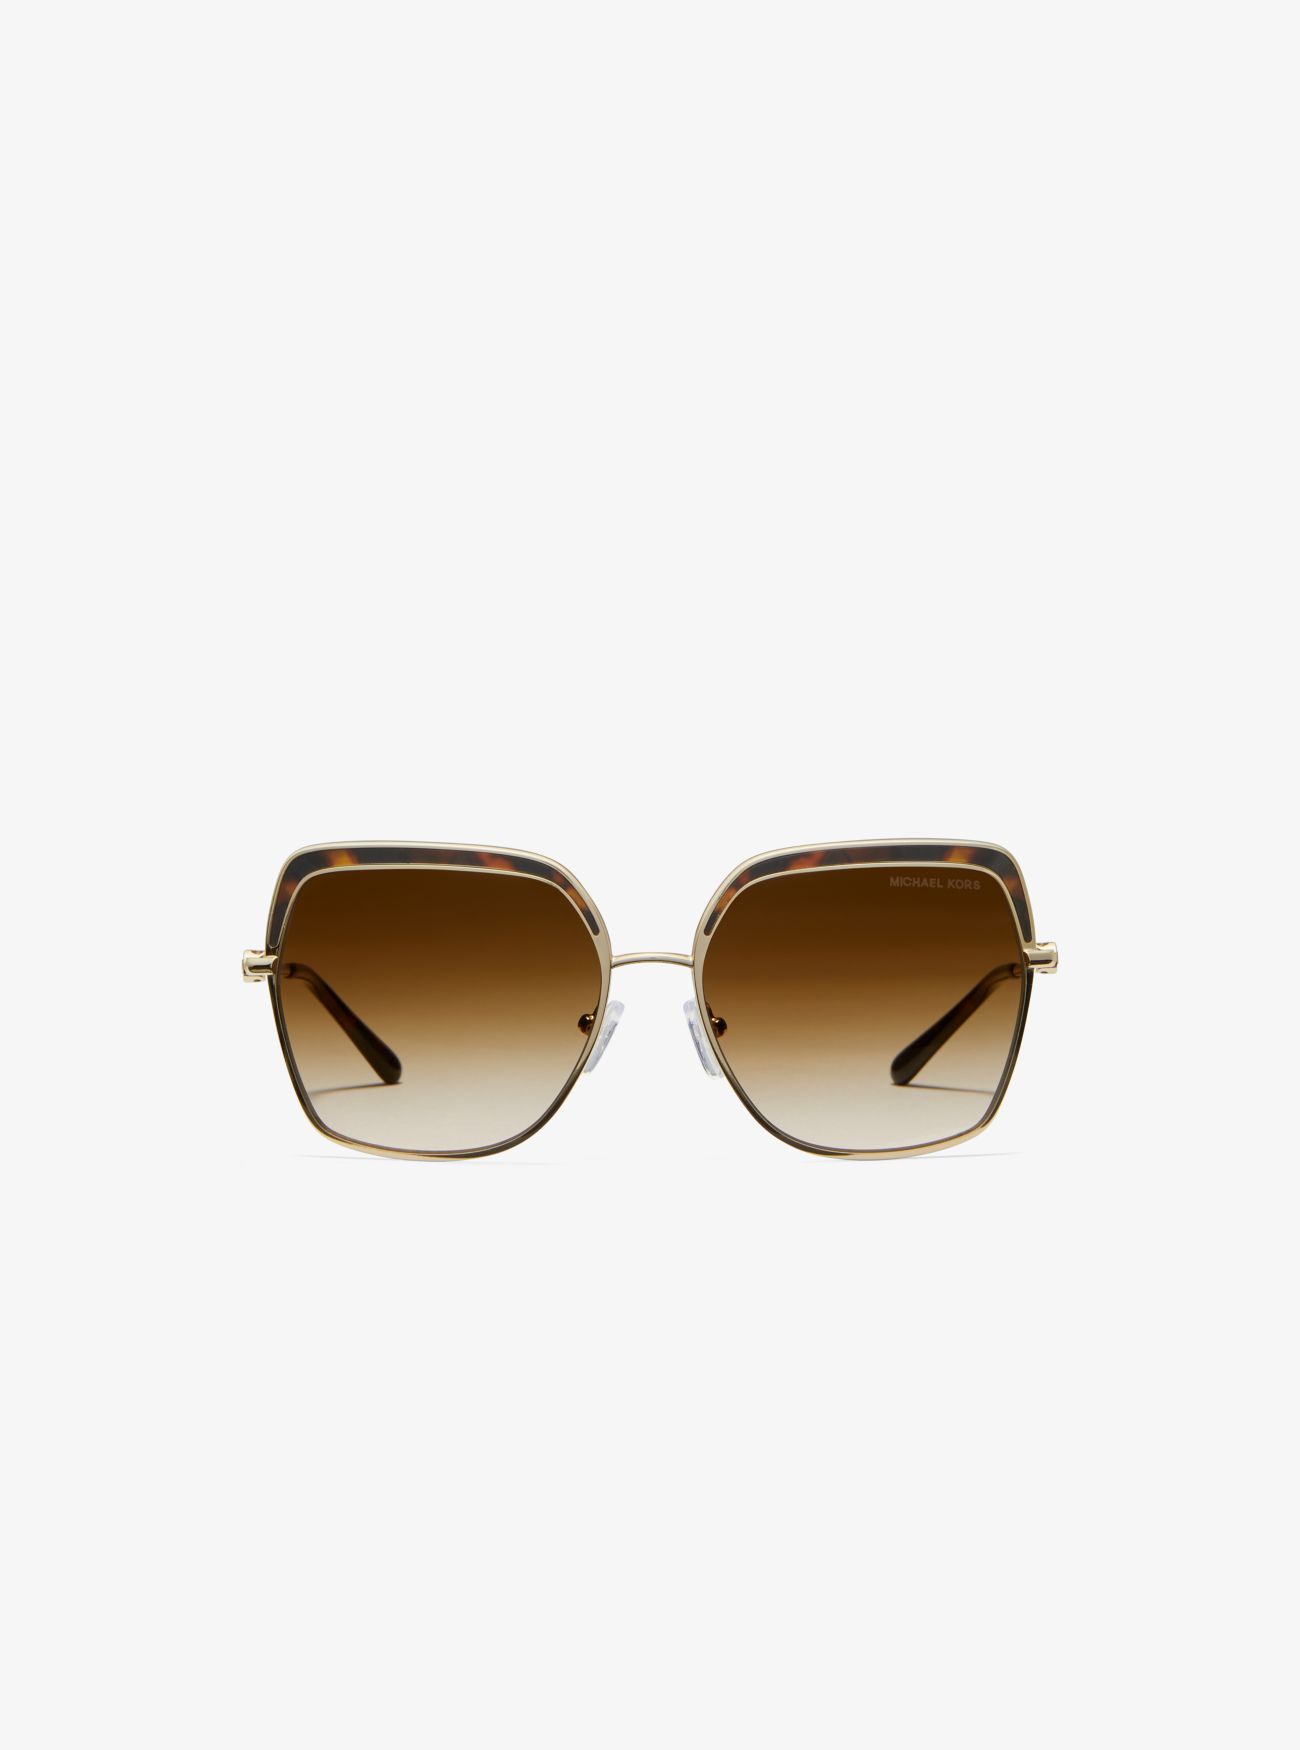 MK Greenpoint Sunglasses - Brown - Michael Kors